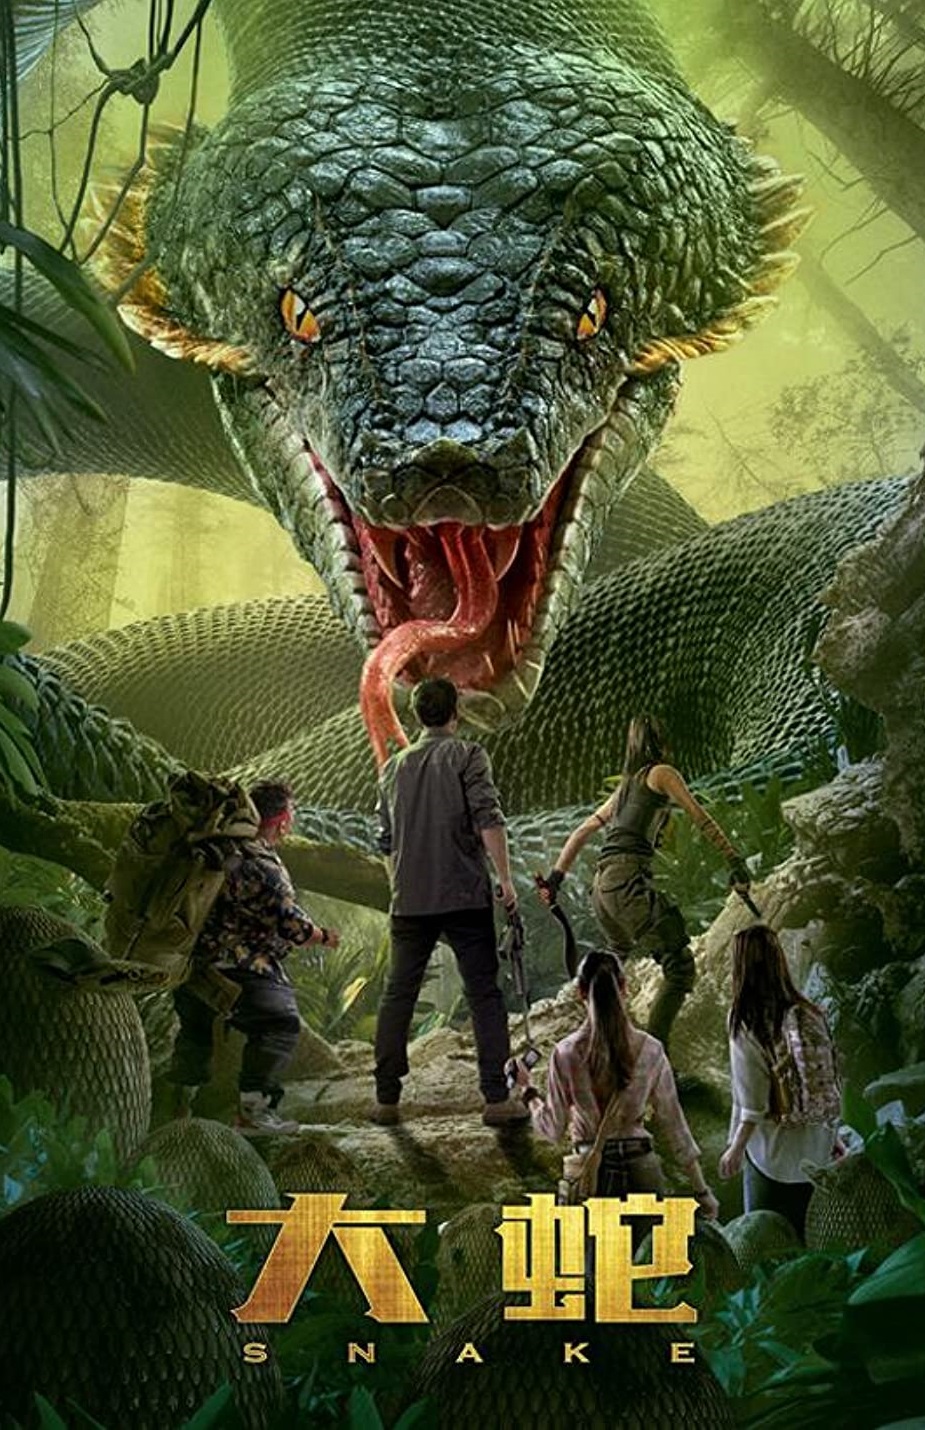 Snake 2018 Tamil Dubbed Adventure Movie Online